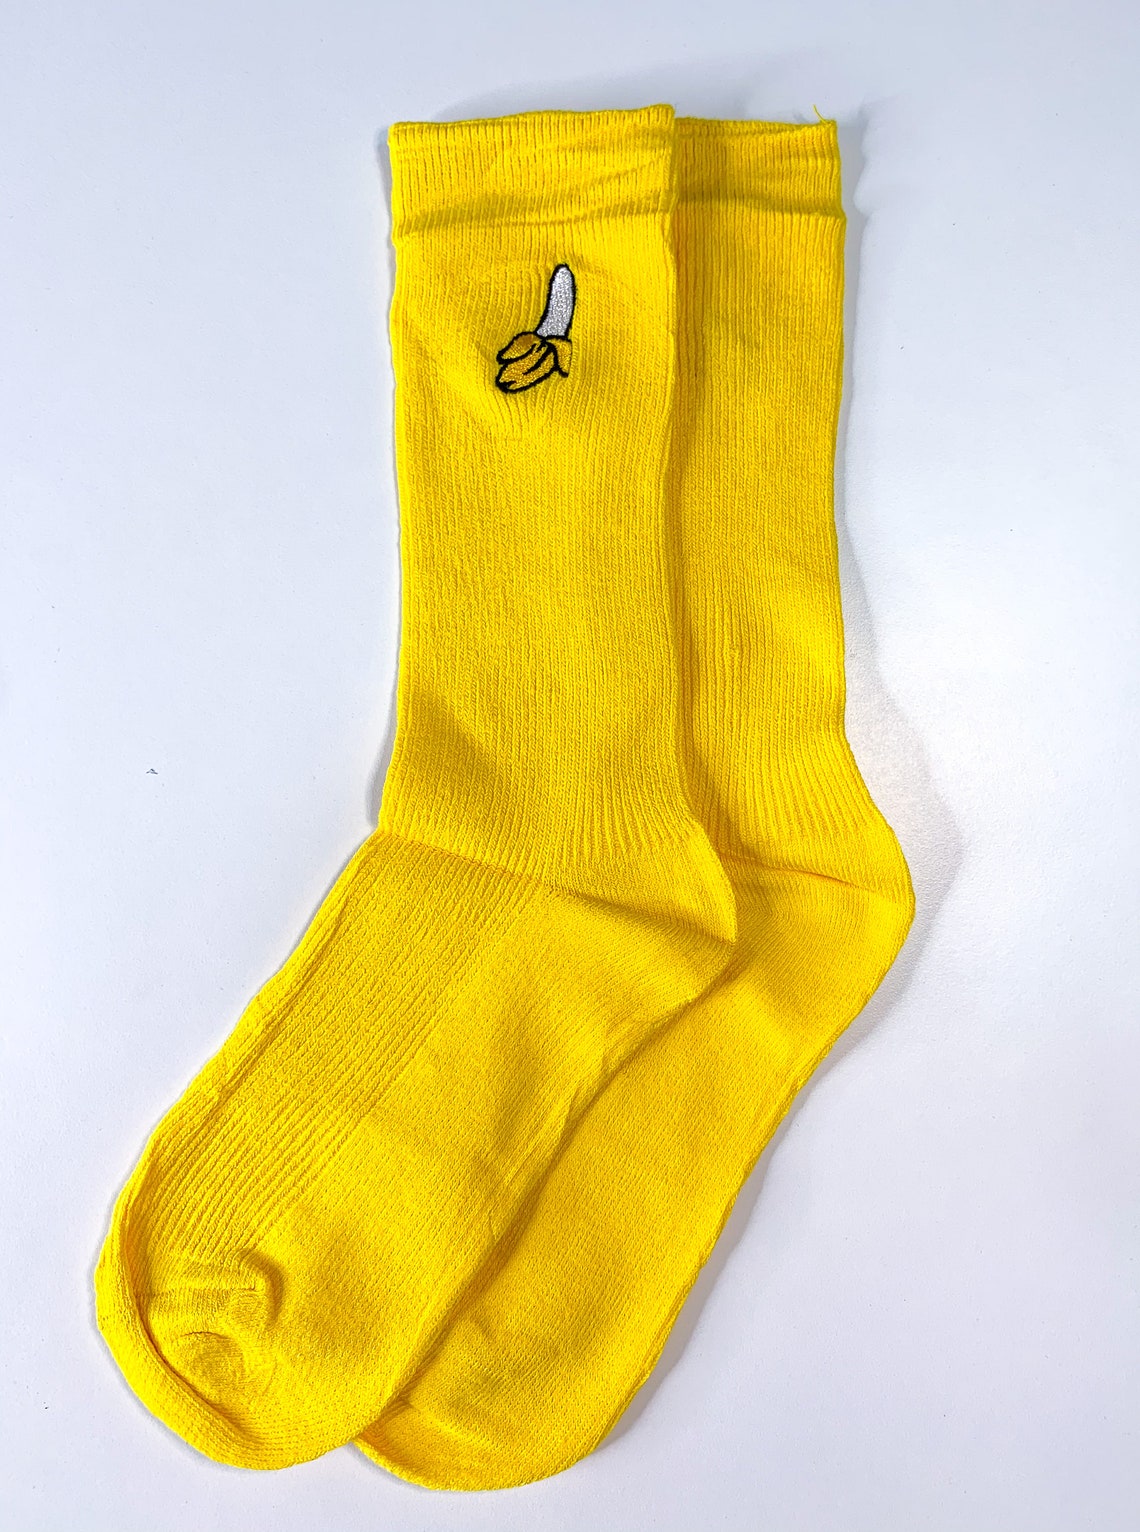 Banana fruiti crew socks funky yellow socks | Etsy